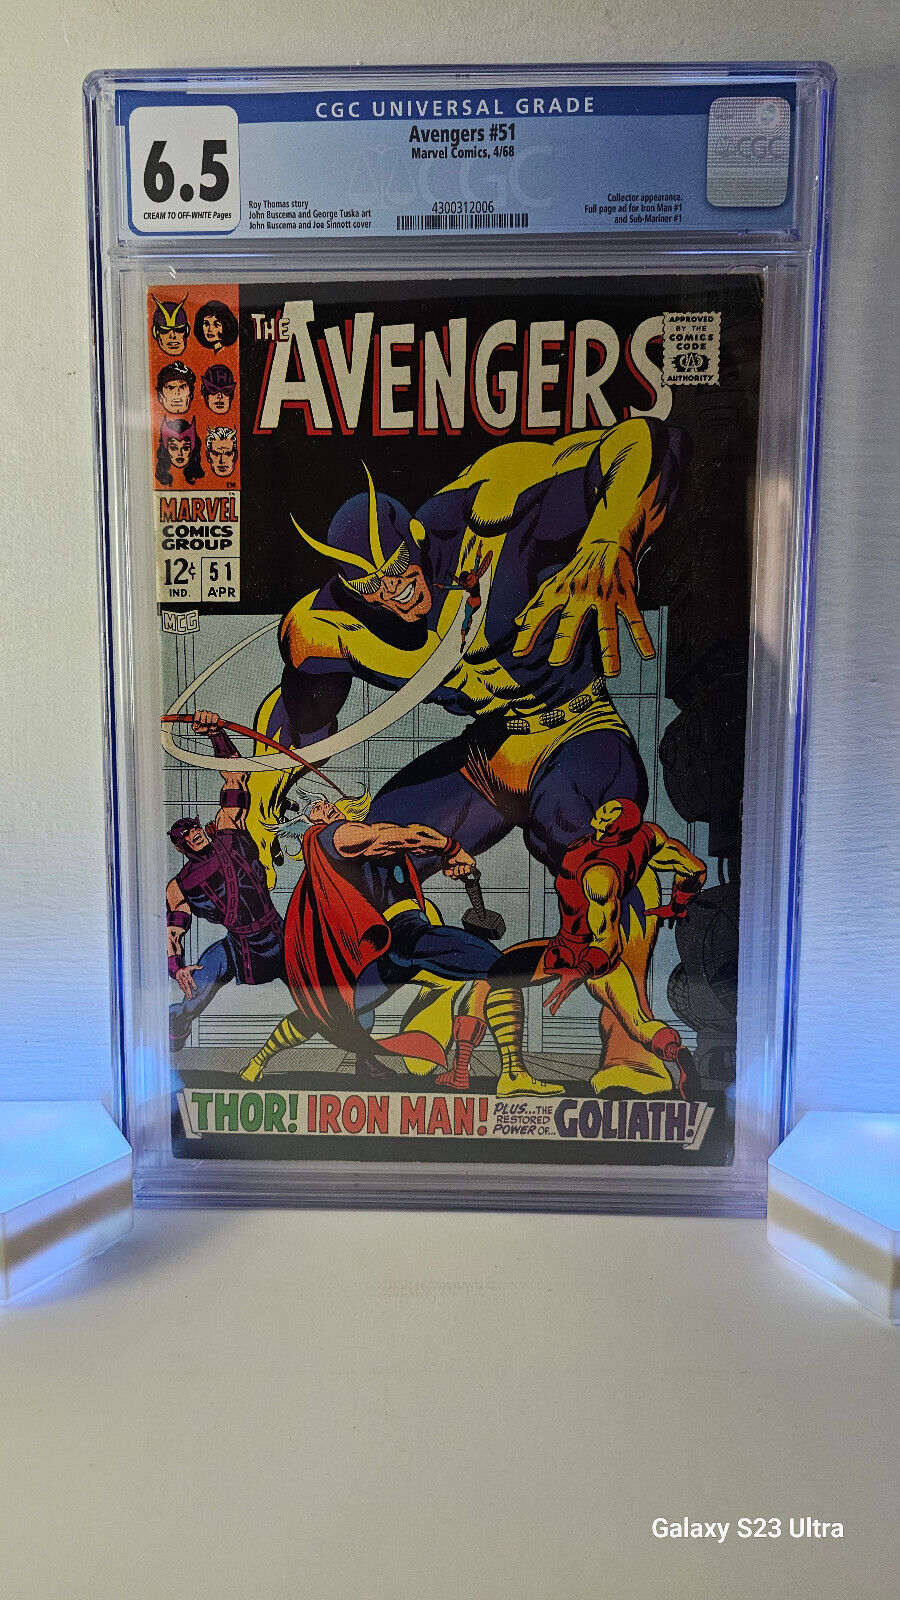 Avengers #51 - Graded CGC 6.5 - Marvel Comics - Silver Age   Beautiful Book